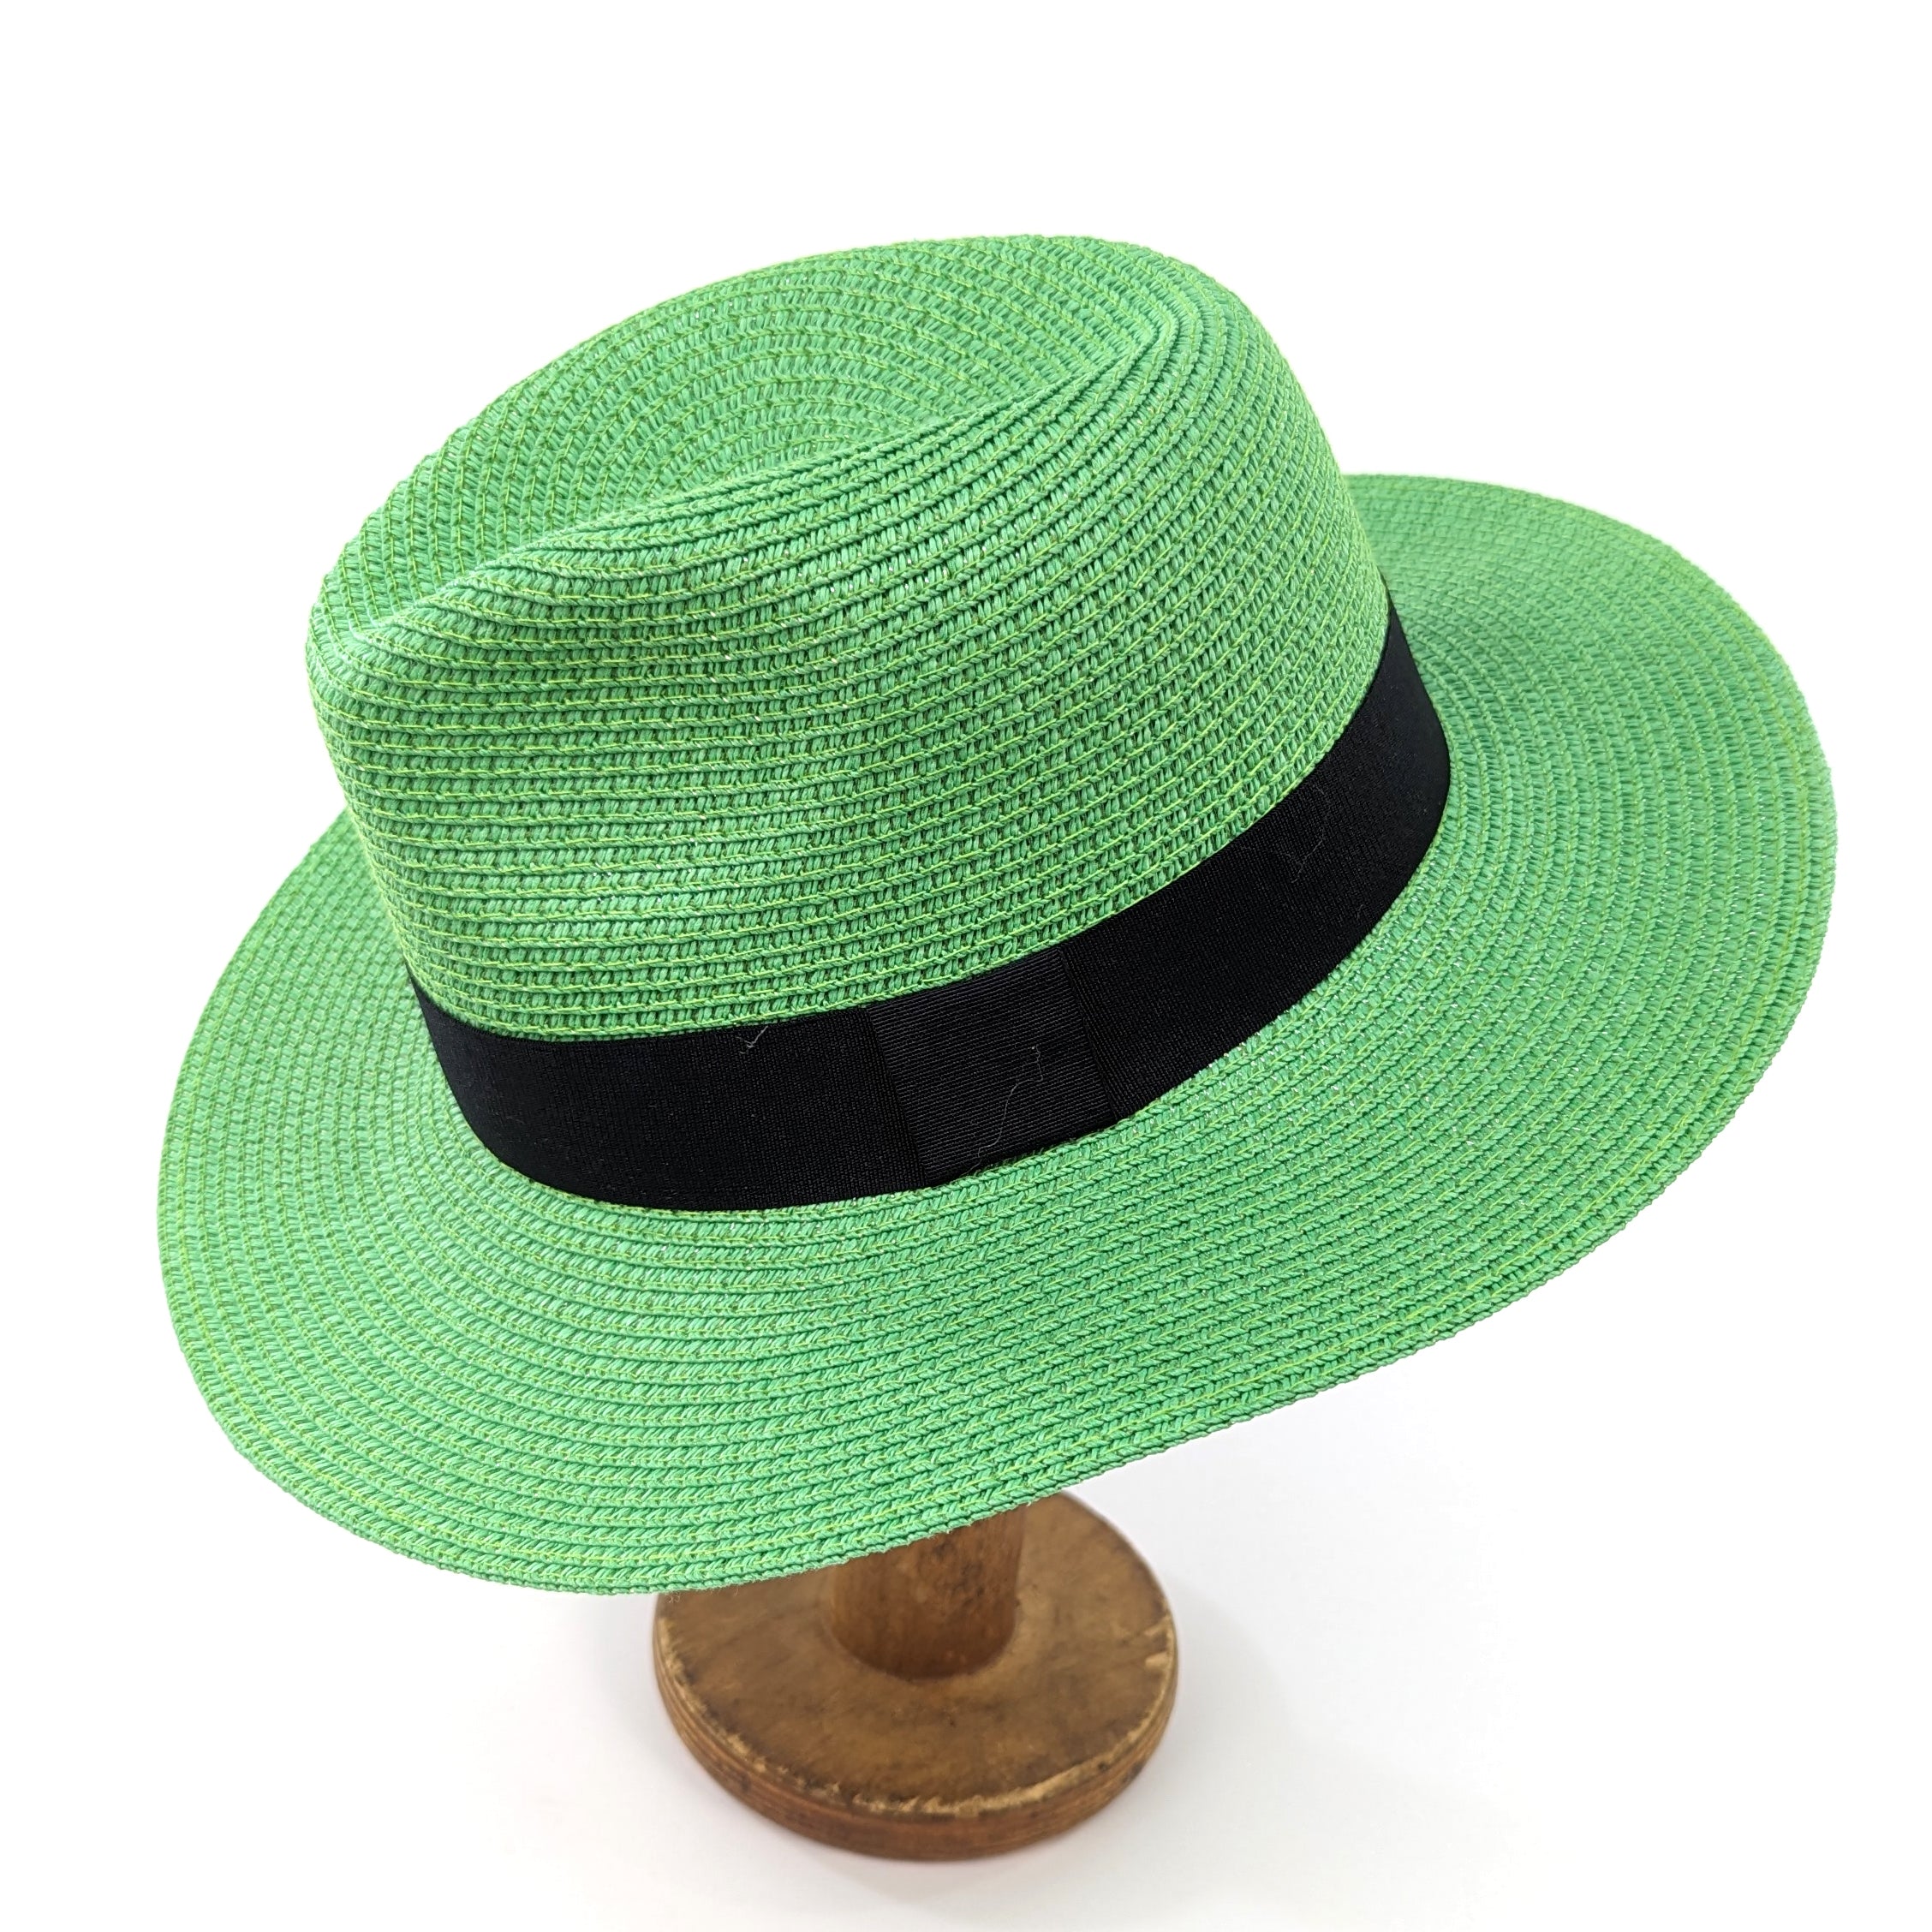 Folding Panama Style Travel Sun Hat - Green & Black (57cm)